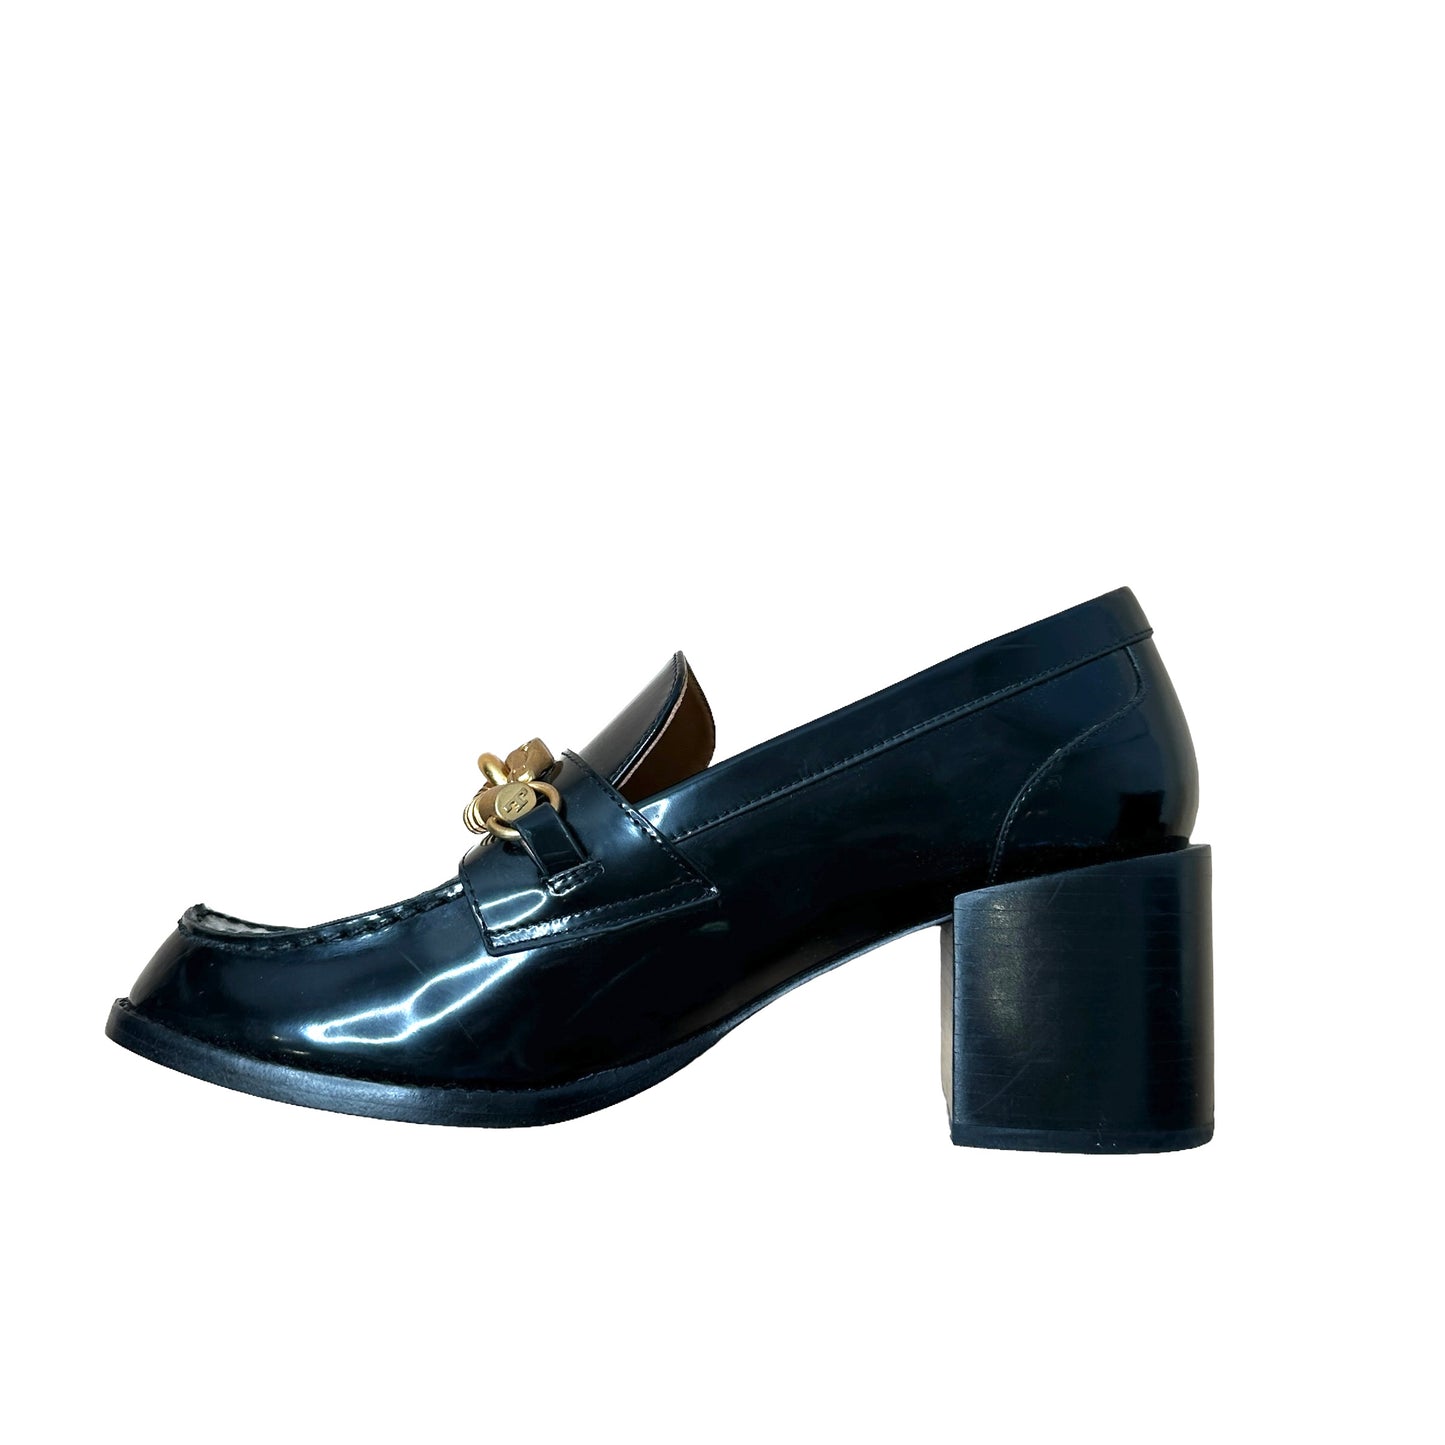 Black Heels Loafers - 8.5